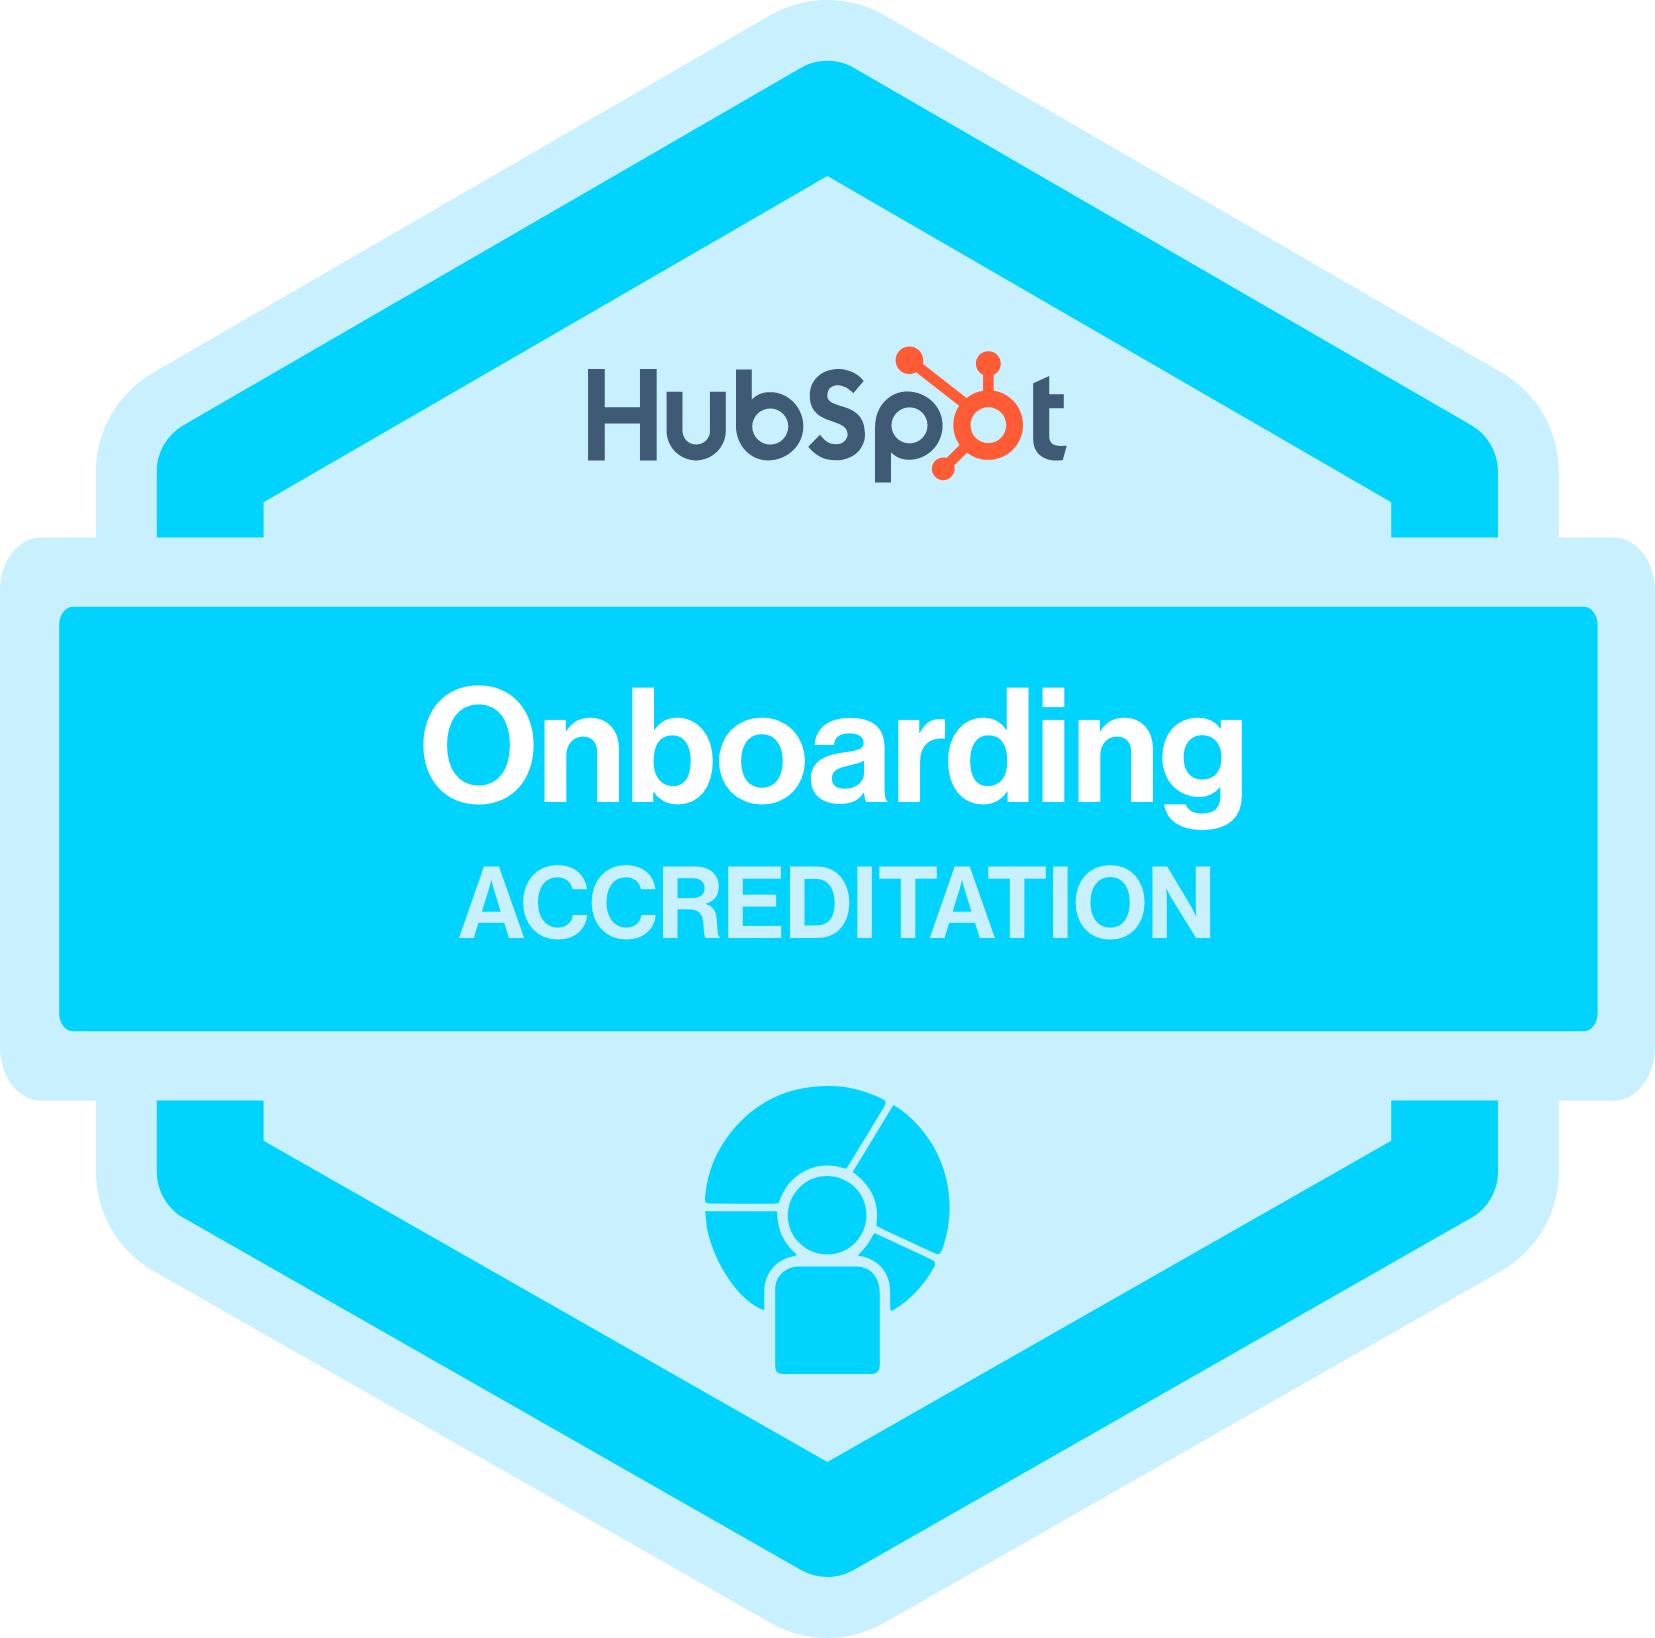 HubSpot Onboarding Accreditation